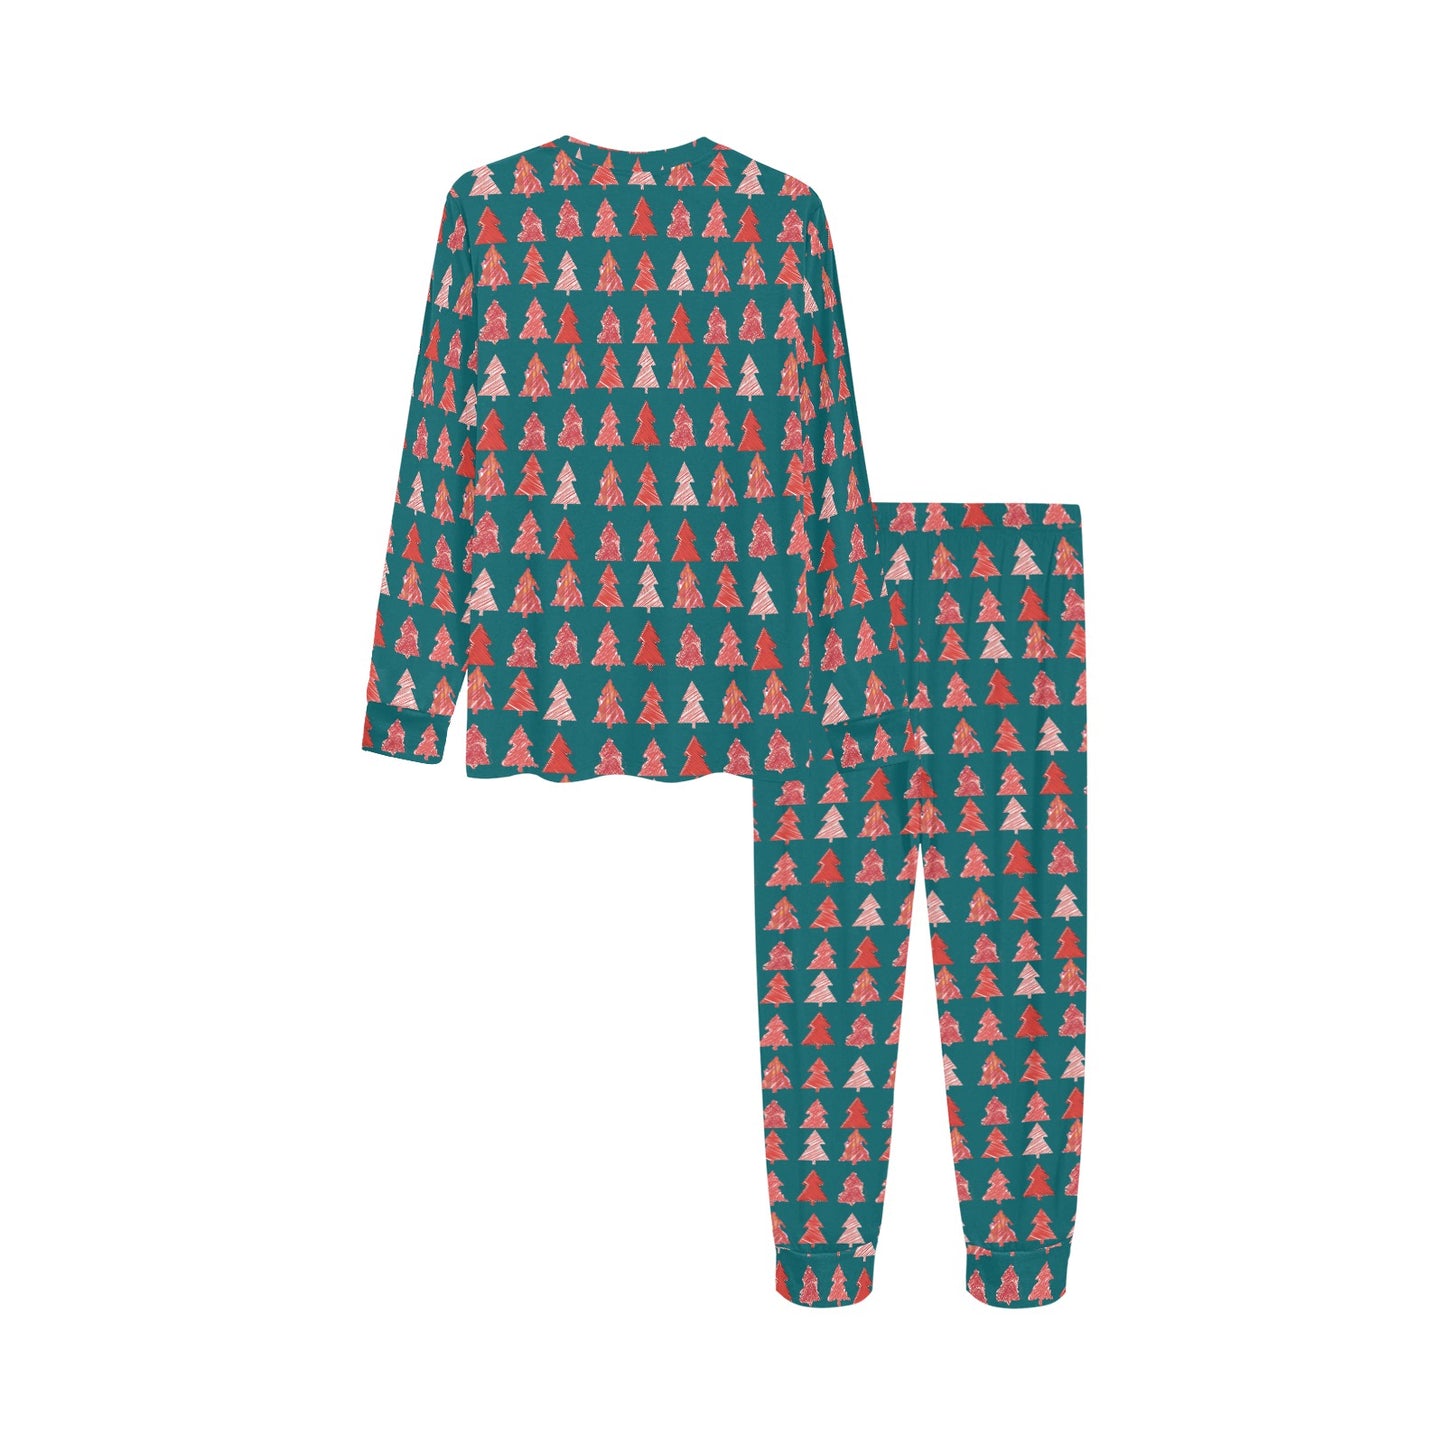 Festive Family Fun: Matching Kids Christmas Pajamas Set!